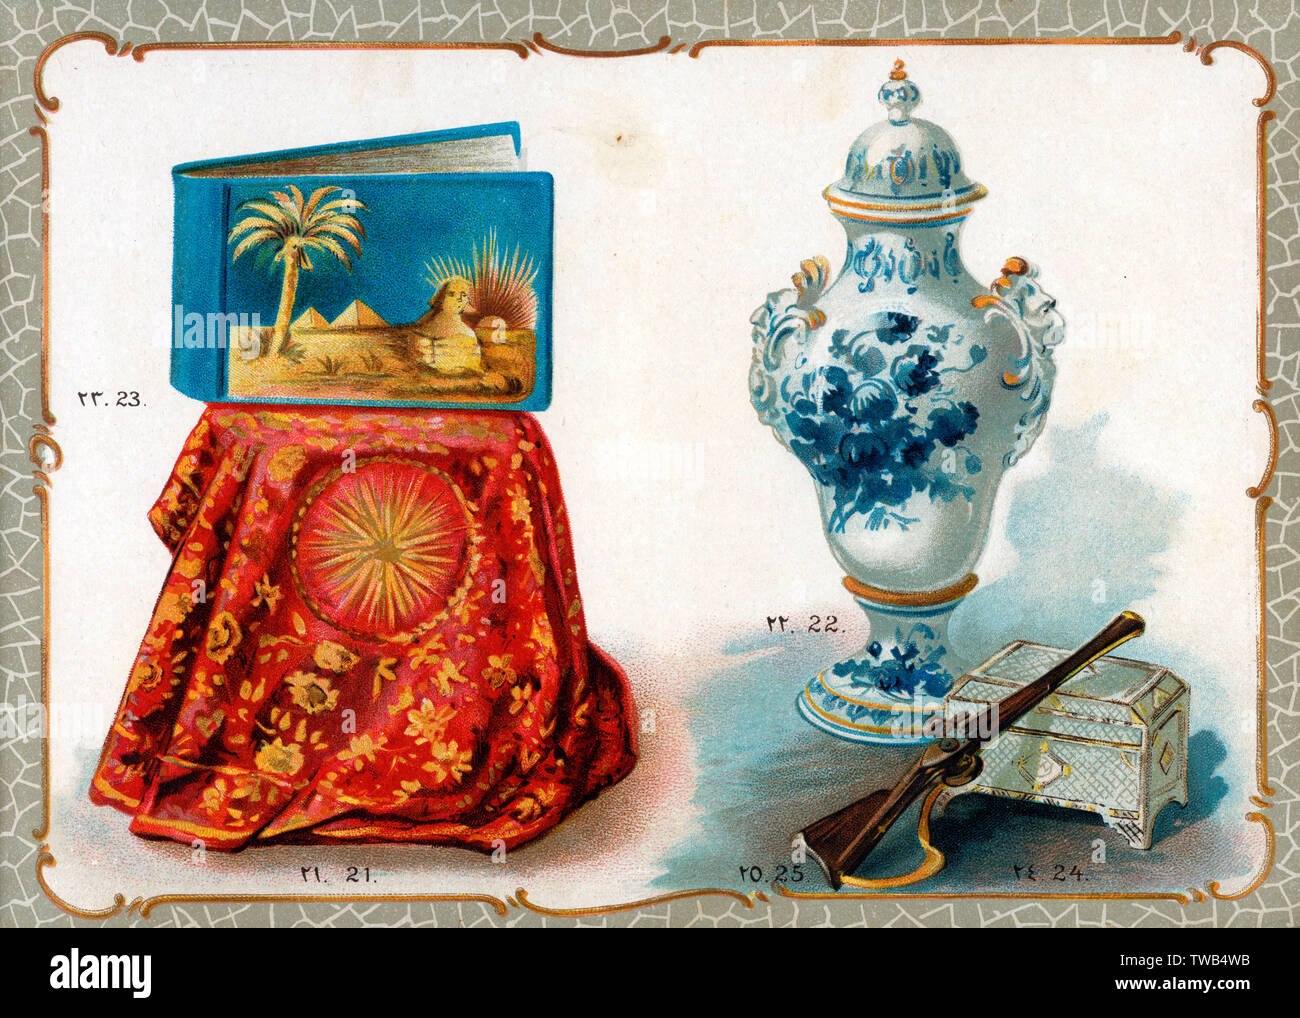 Catalogue illustration, embroidered cloth, vase, album, etc Stock Photo